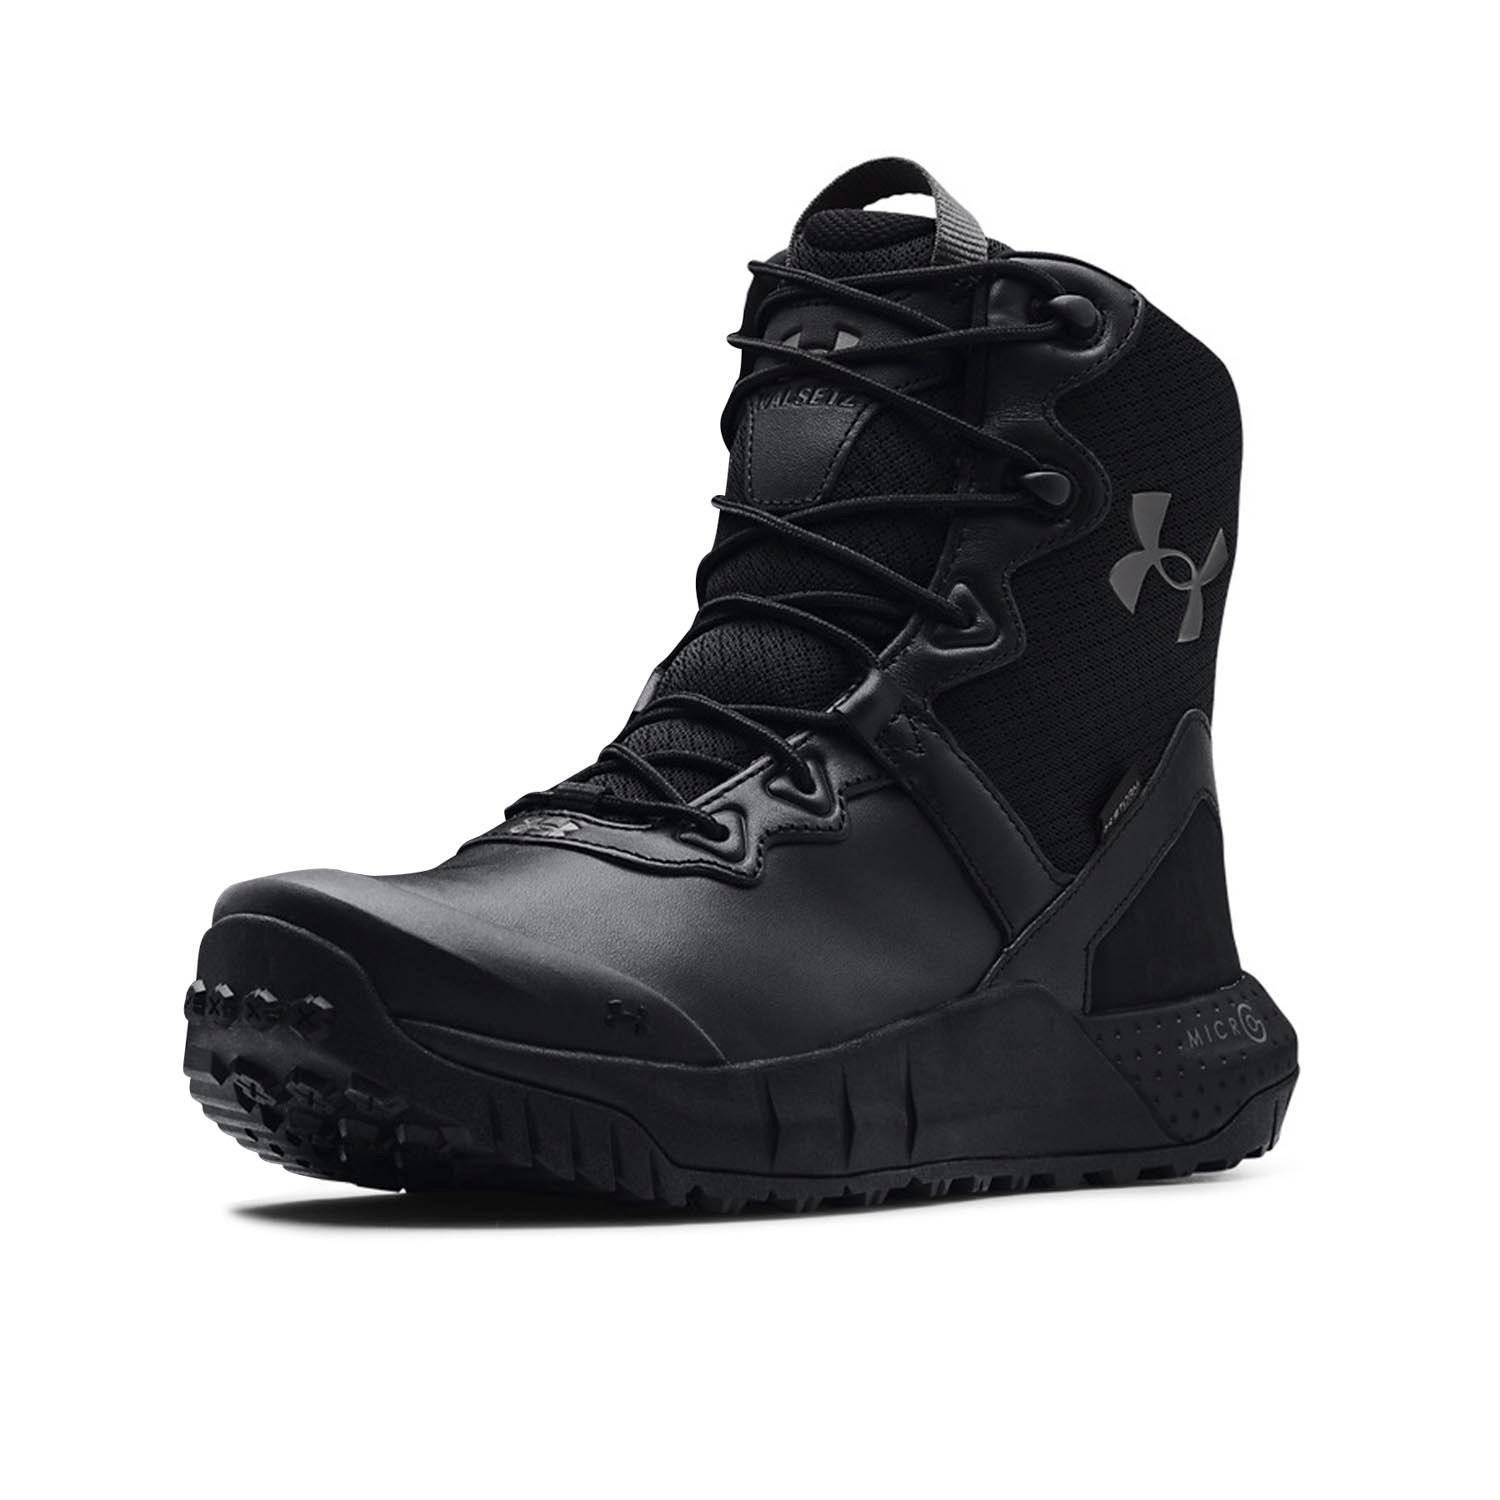 Under Armour Micro G Valsetz Mid Hiking Boot - Men's - Footwear